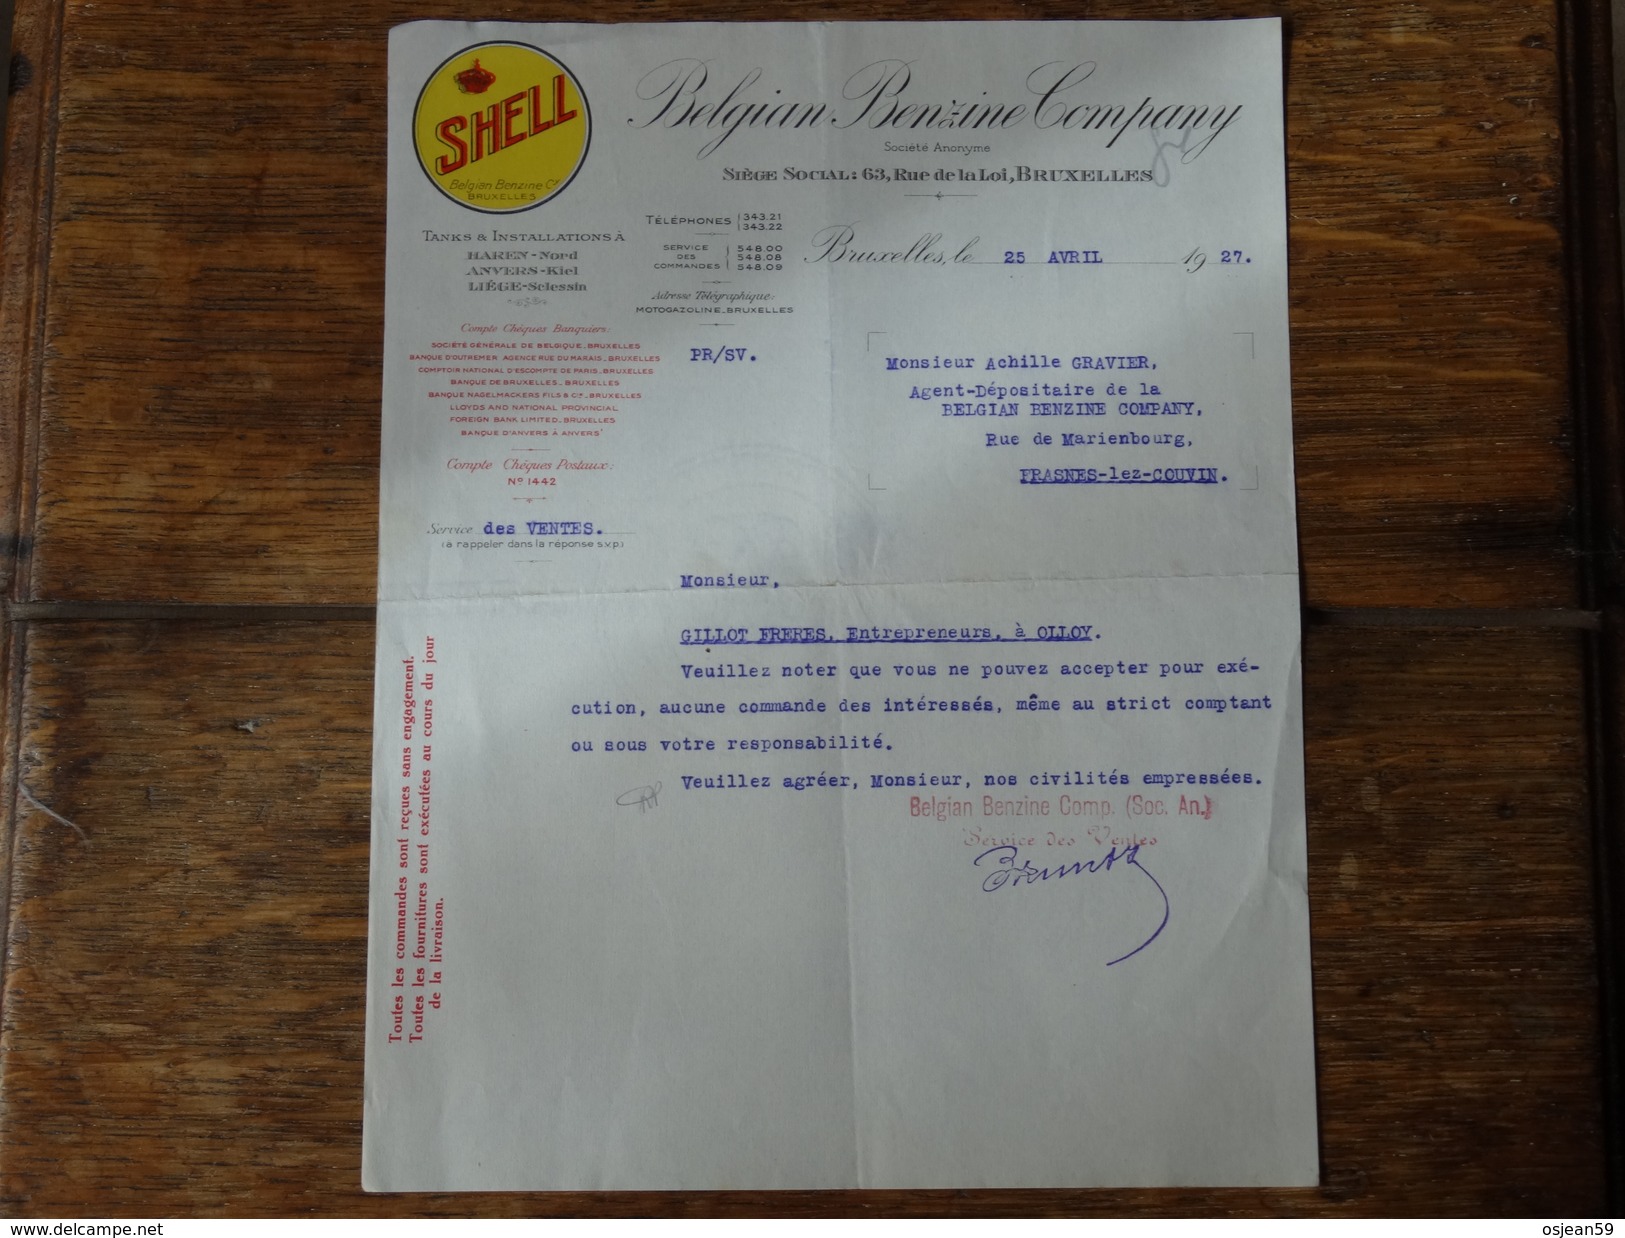 SHELL-Belgian Benzine Company - Courier Du 25 Avril 1927. - Automobile